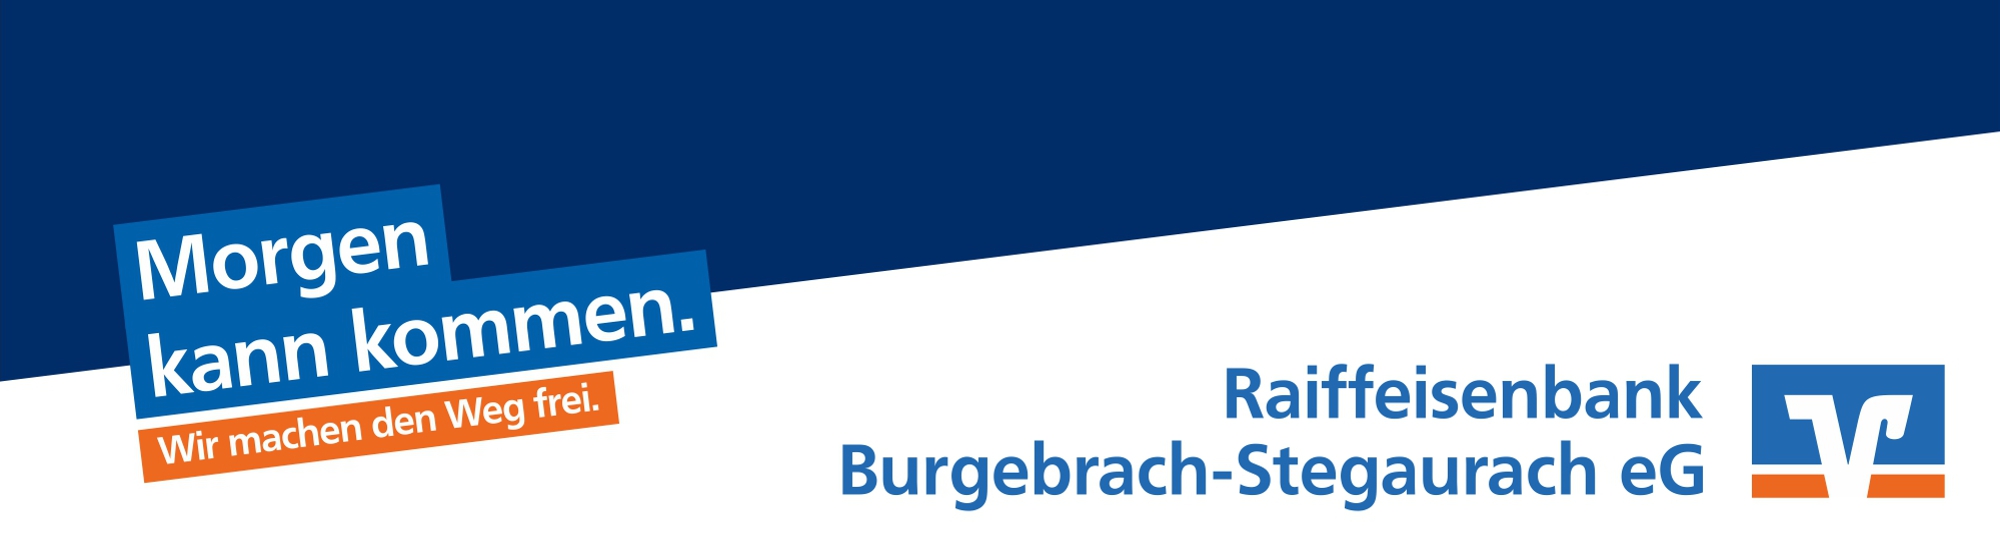 Raiffeisenbank Burgebrach-Stegaurach eG